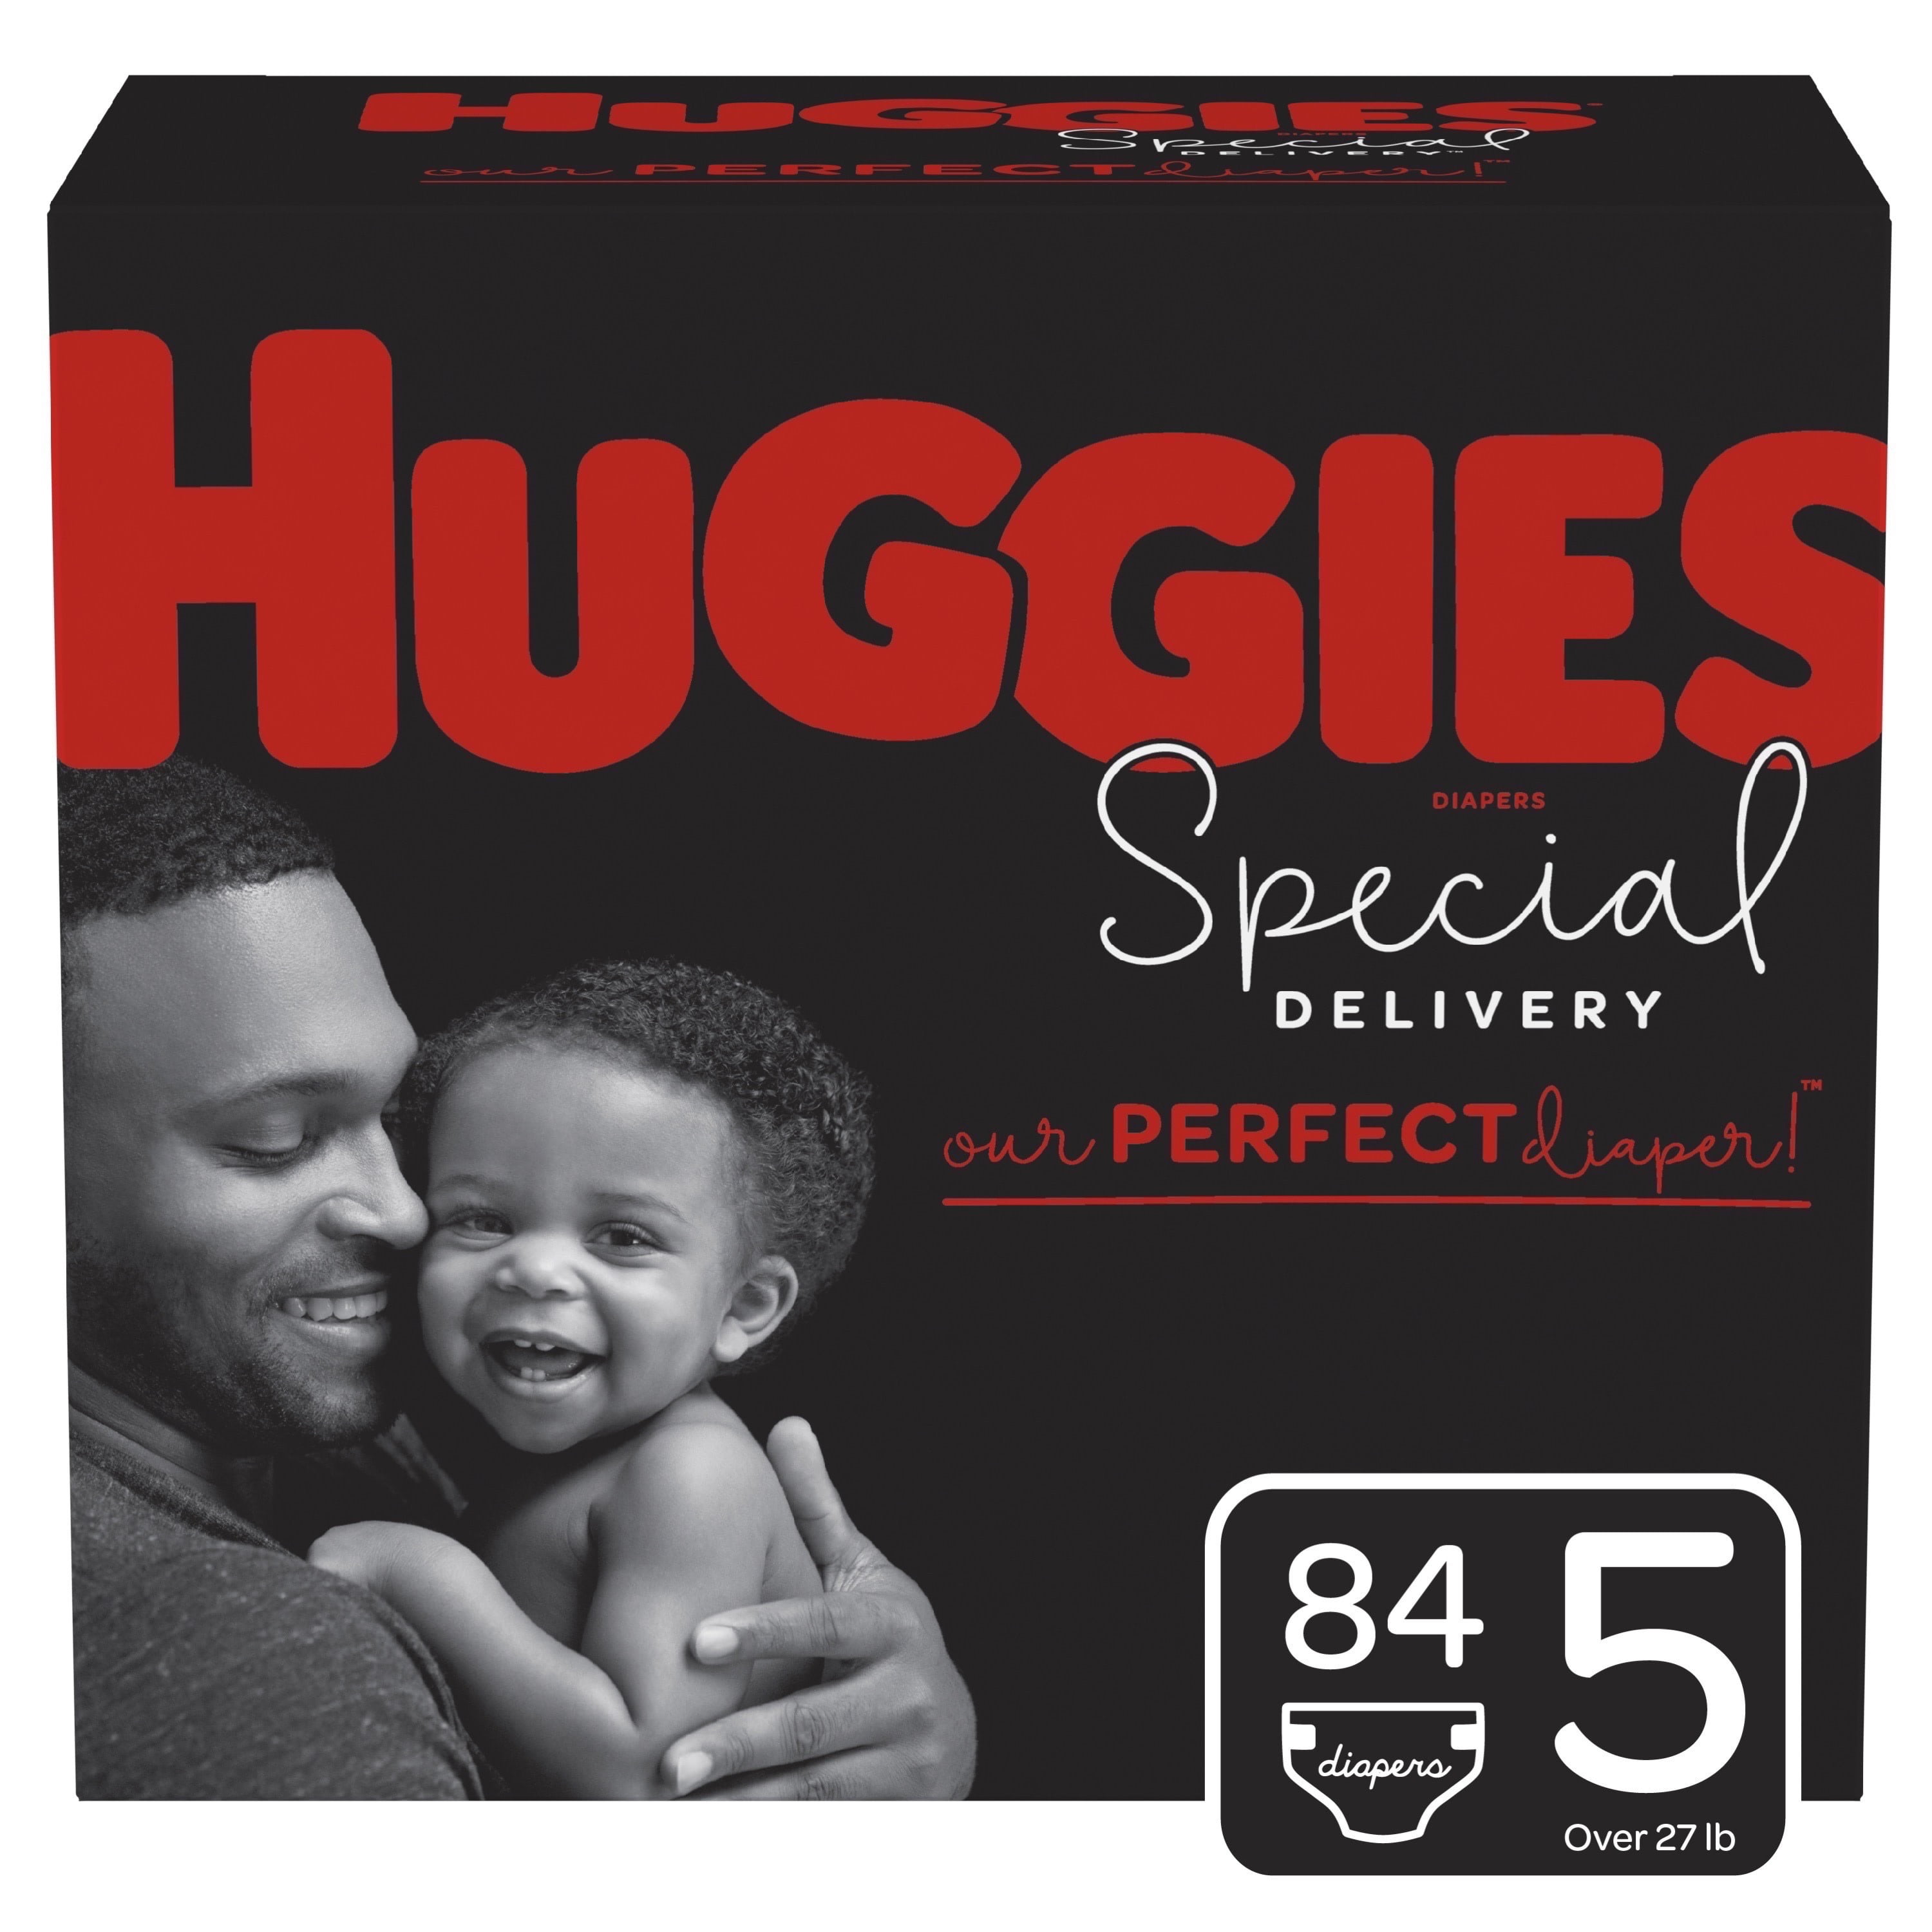 huggies special delivery newborn